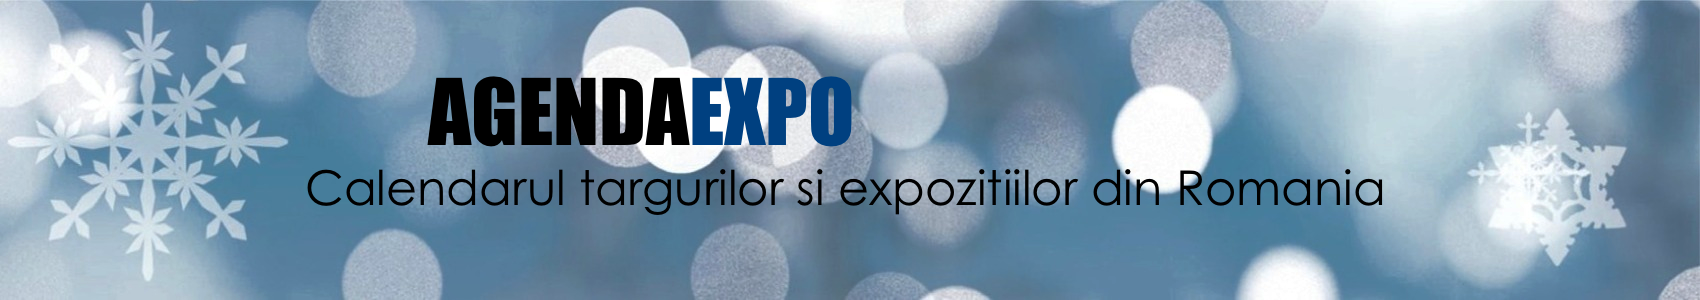 AGENDA EXPO